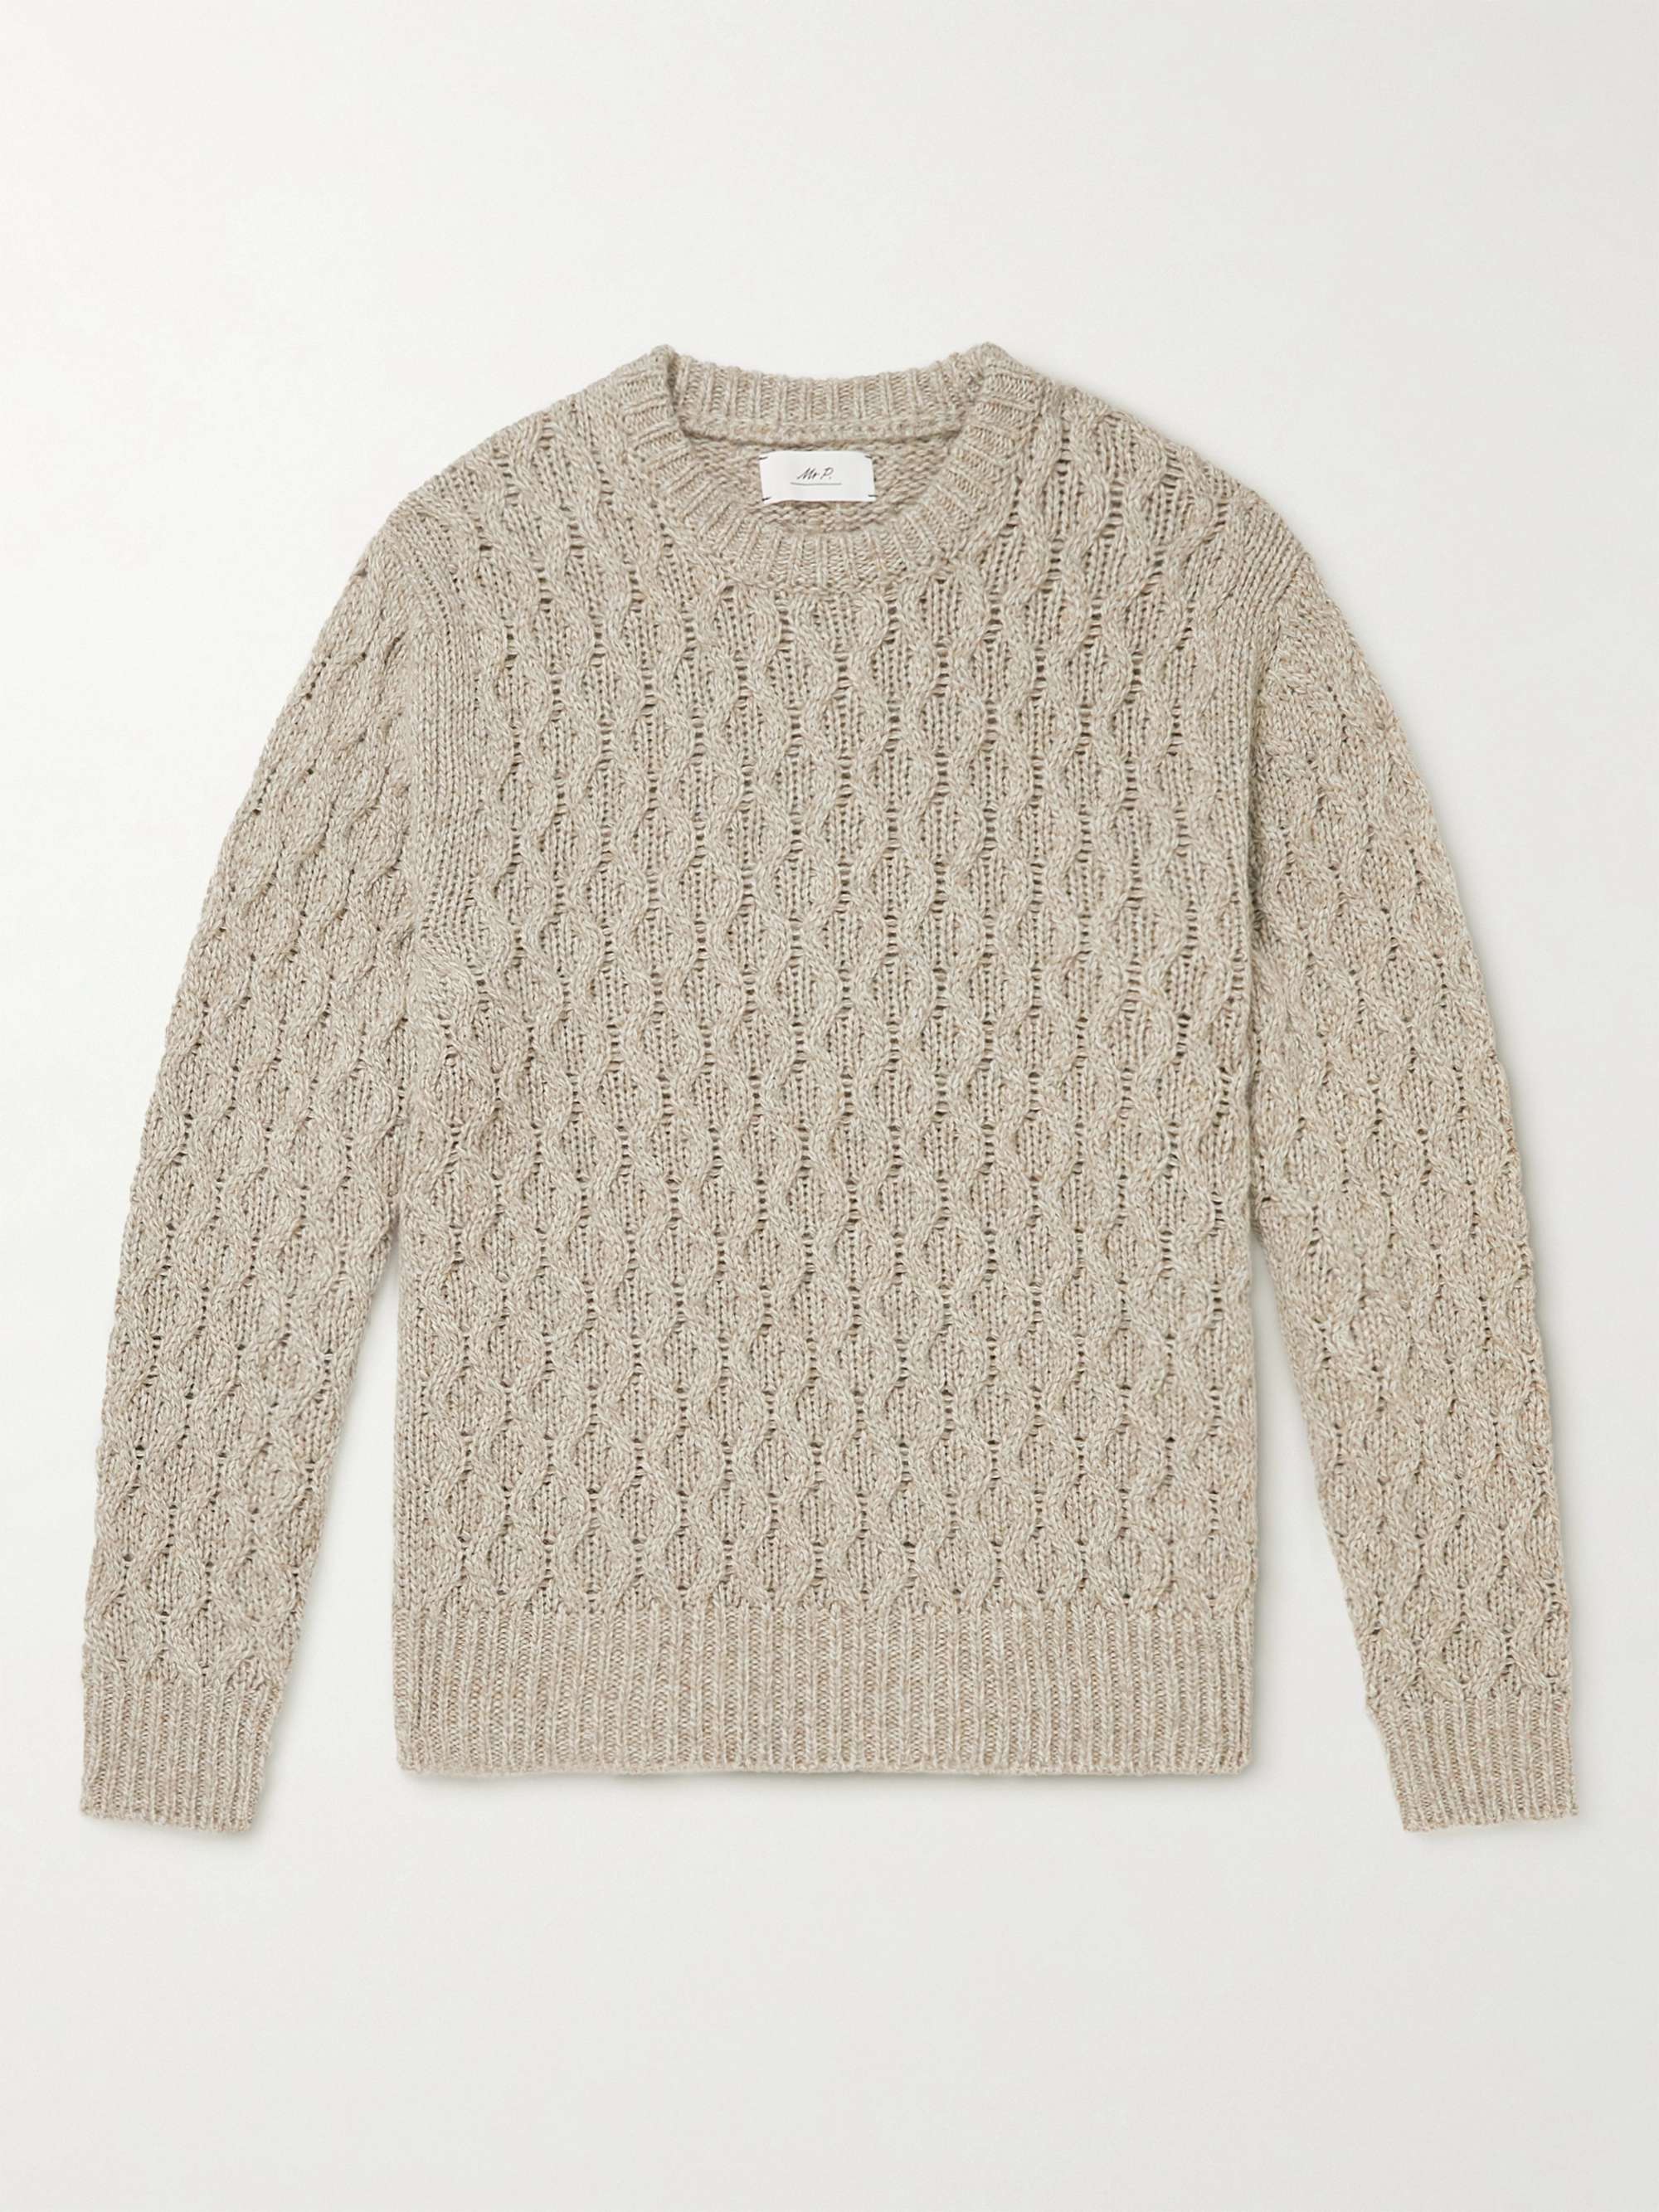 MR P. Slim-Fit Cable-Knit Alpaca-Blend Sweater for Men | MR PORTER